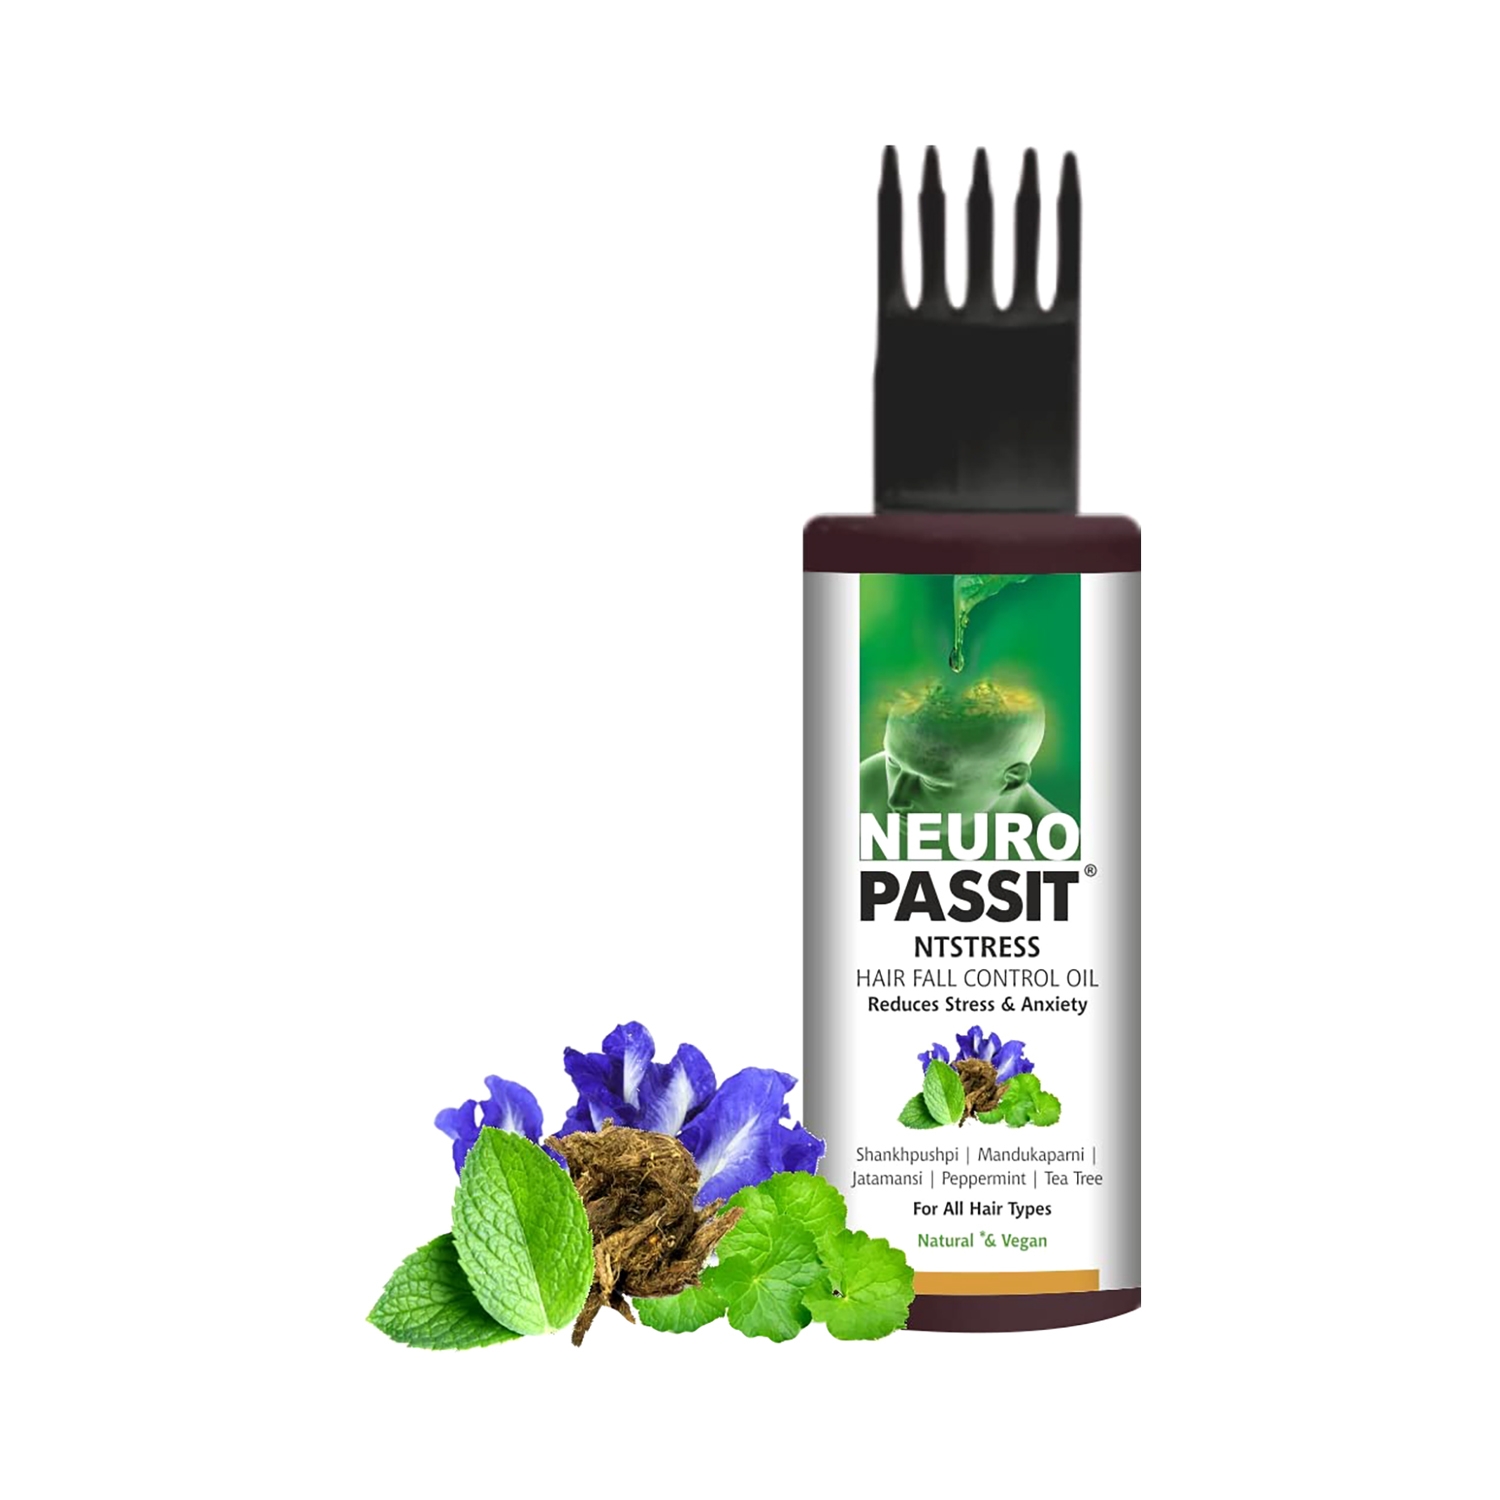 Passion Indulge | Passion Indulge Hair Fall Control Neuropassit Ntstress Oil (100 ml)